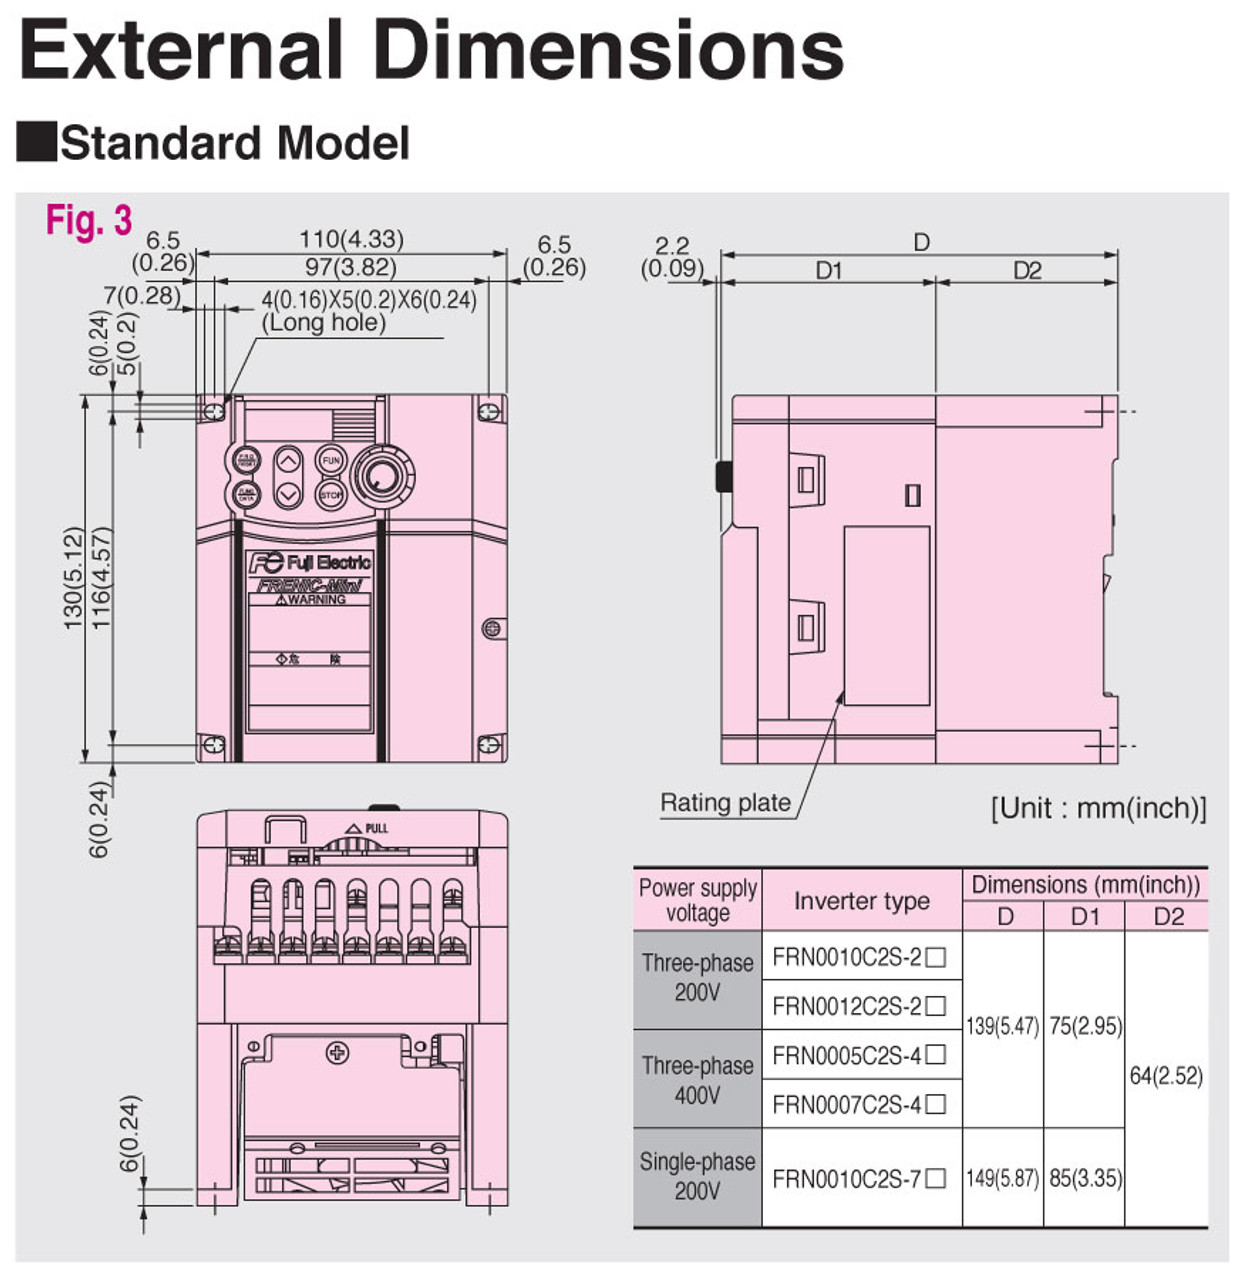 FRN0007C2S-4U - Dimensions